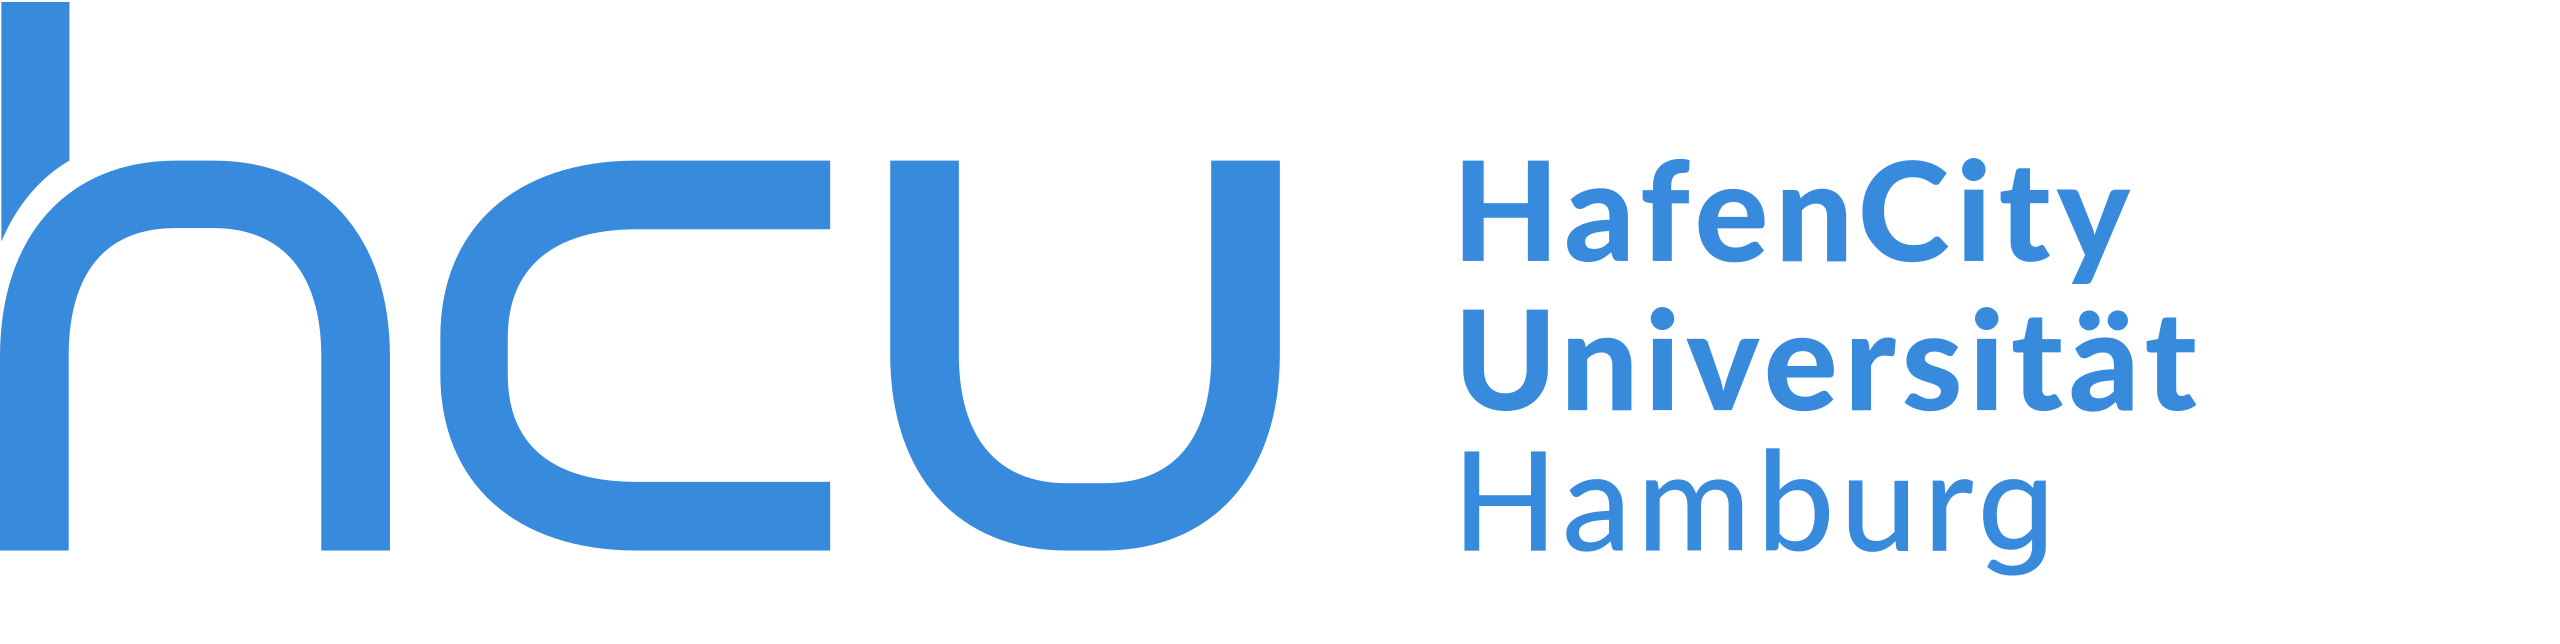 HafenCity University Hamburg (HCU) Germany